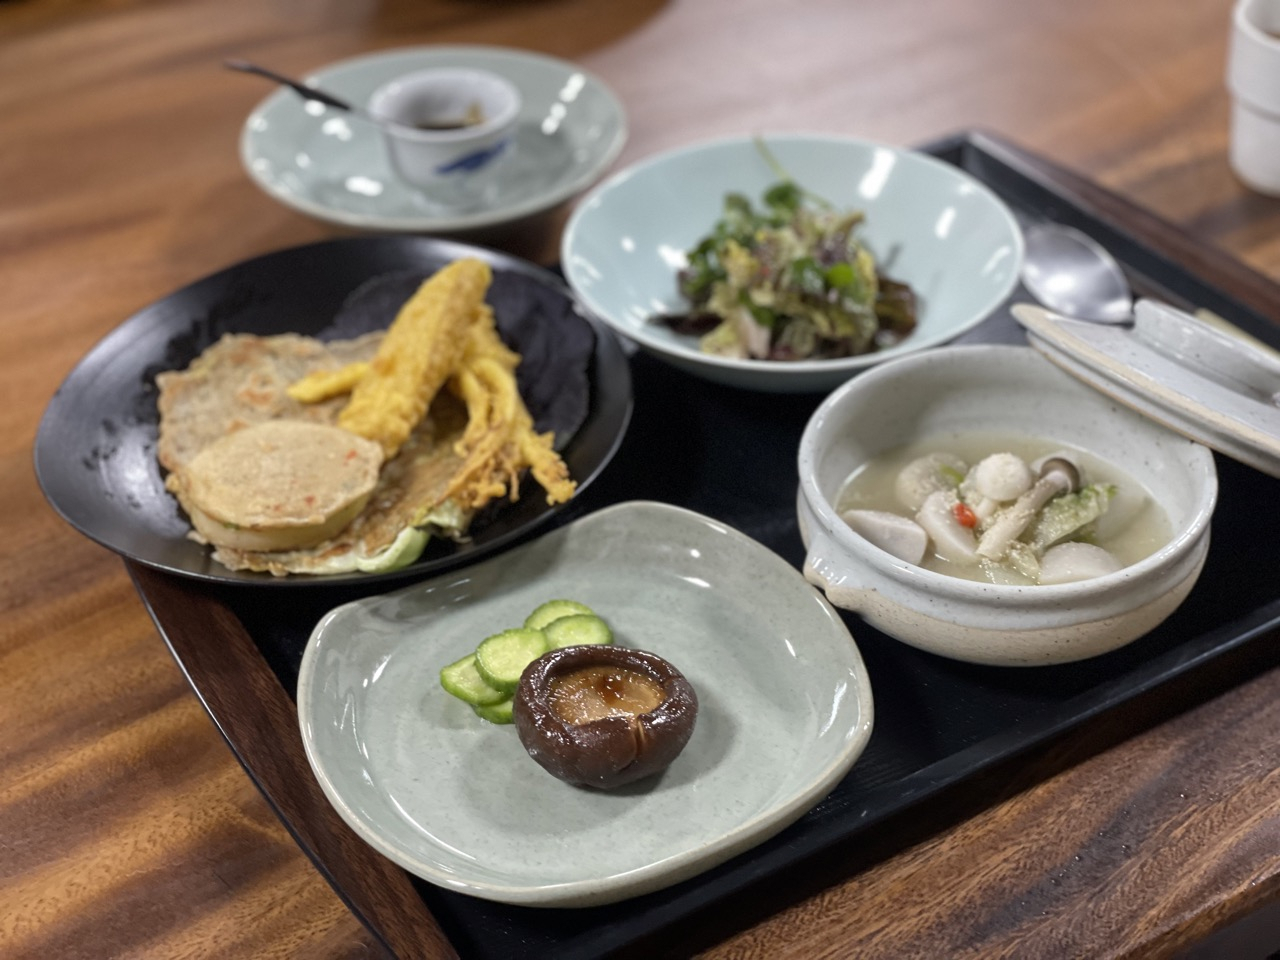 Dishes prepared during Baekyangsa’s Buddhist cuisine program by Ven. Jeong Kwan on Nov. 10. (Park Ga-young/The Korea Herald)